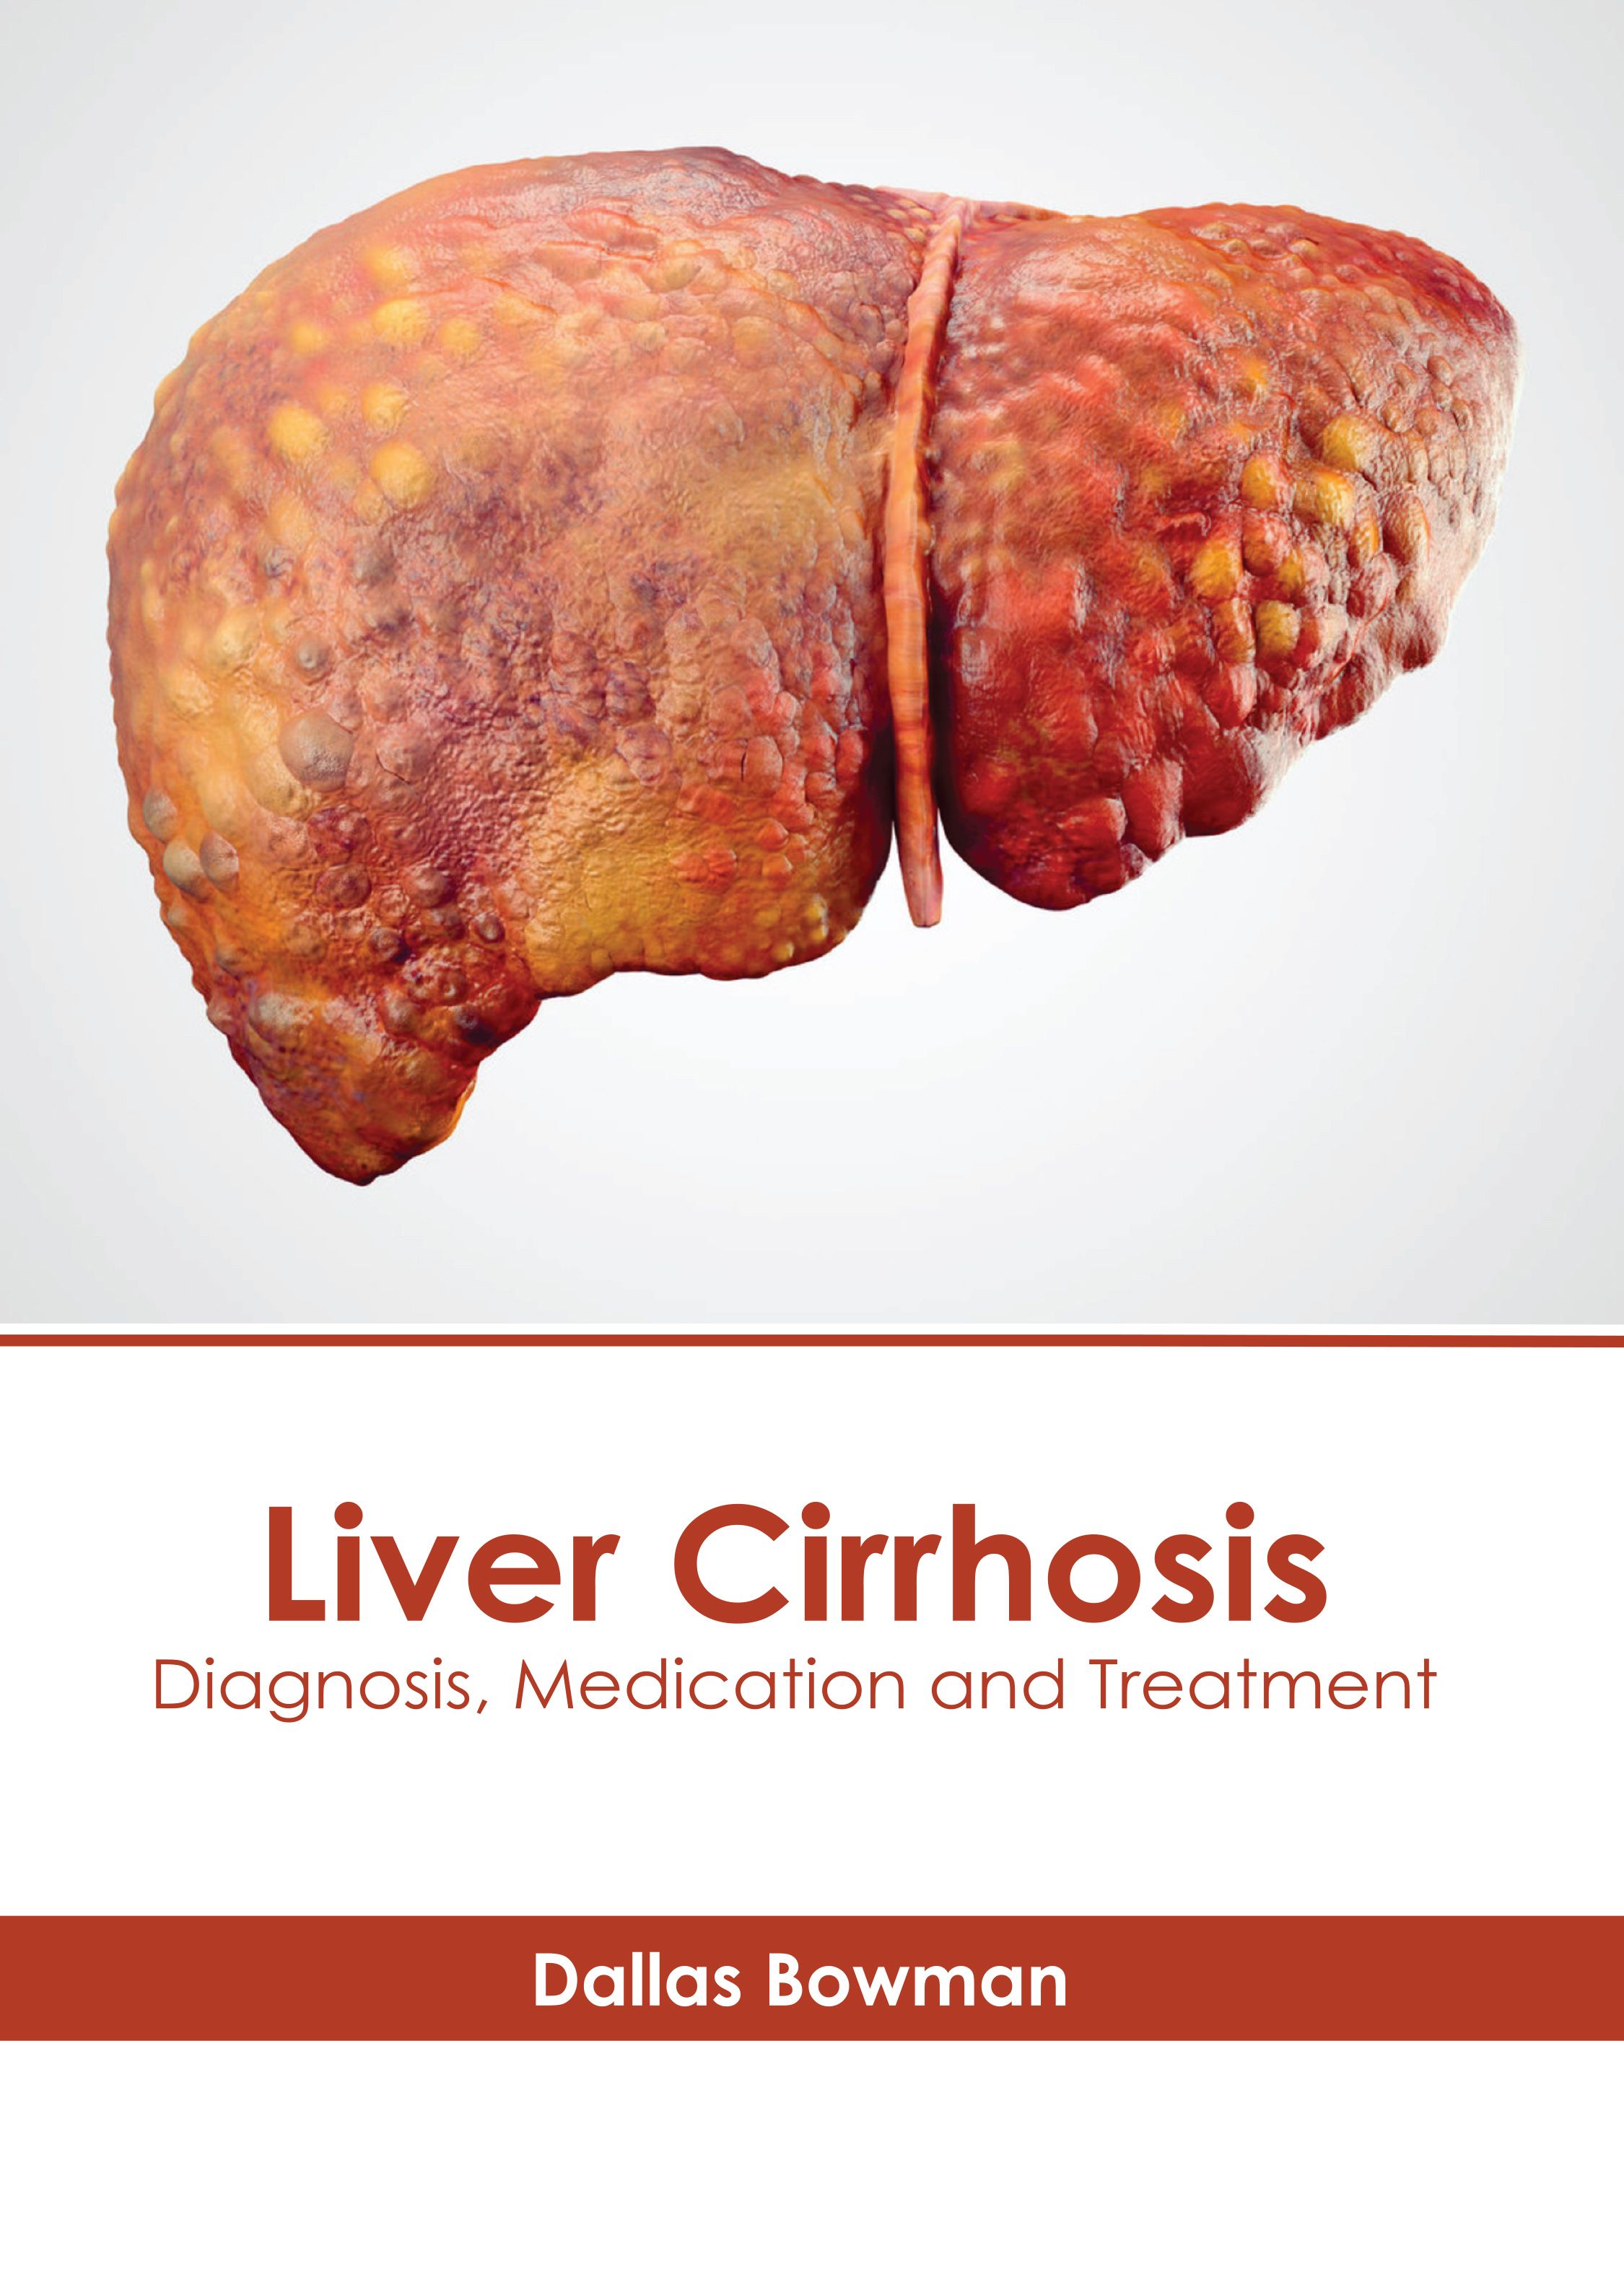 LIVER CIRRHOSIS: DIAGNOSIS, MEDICATION AND TREATMENT